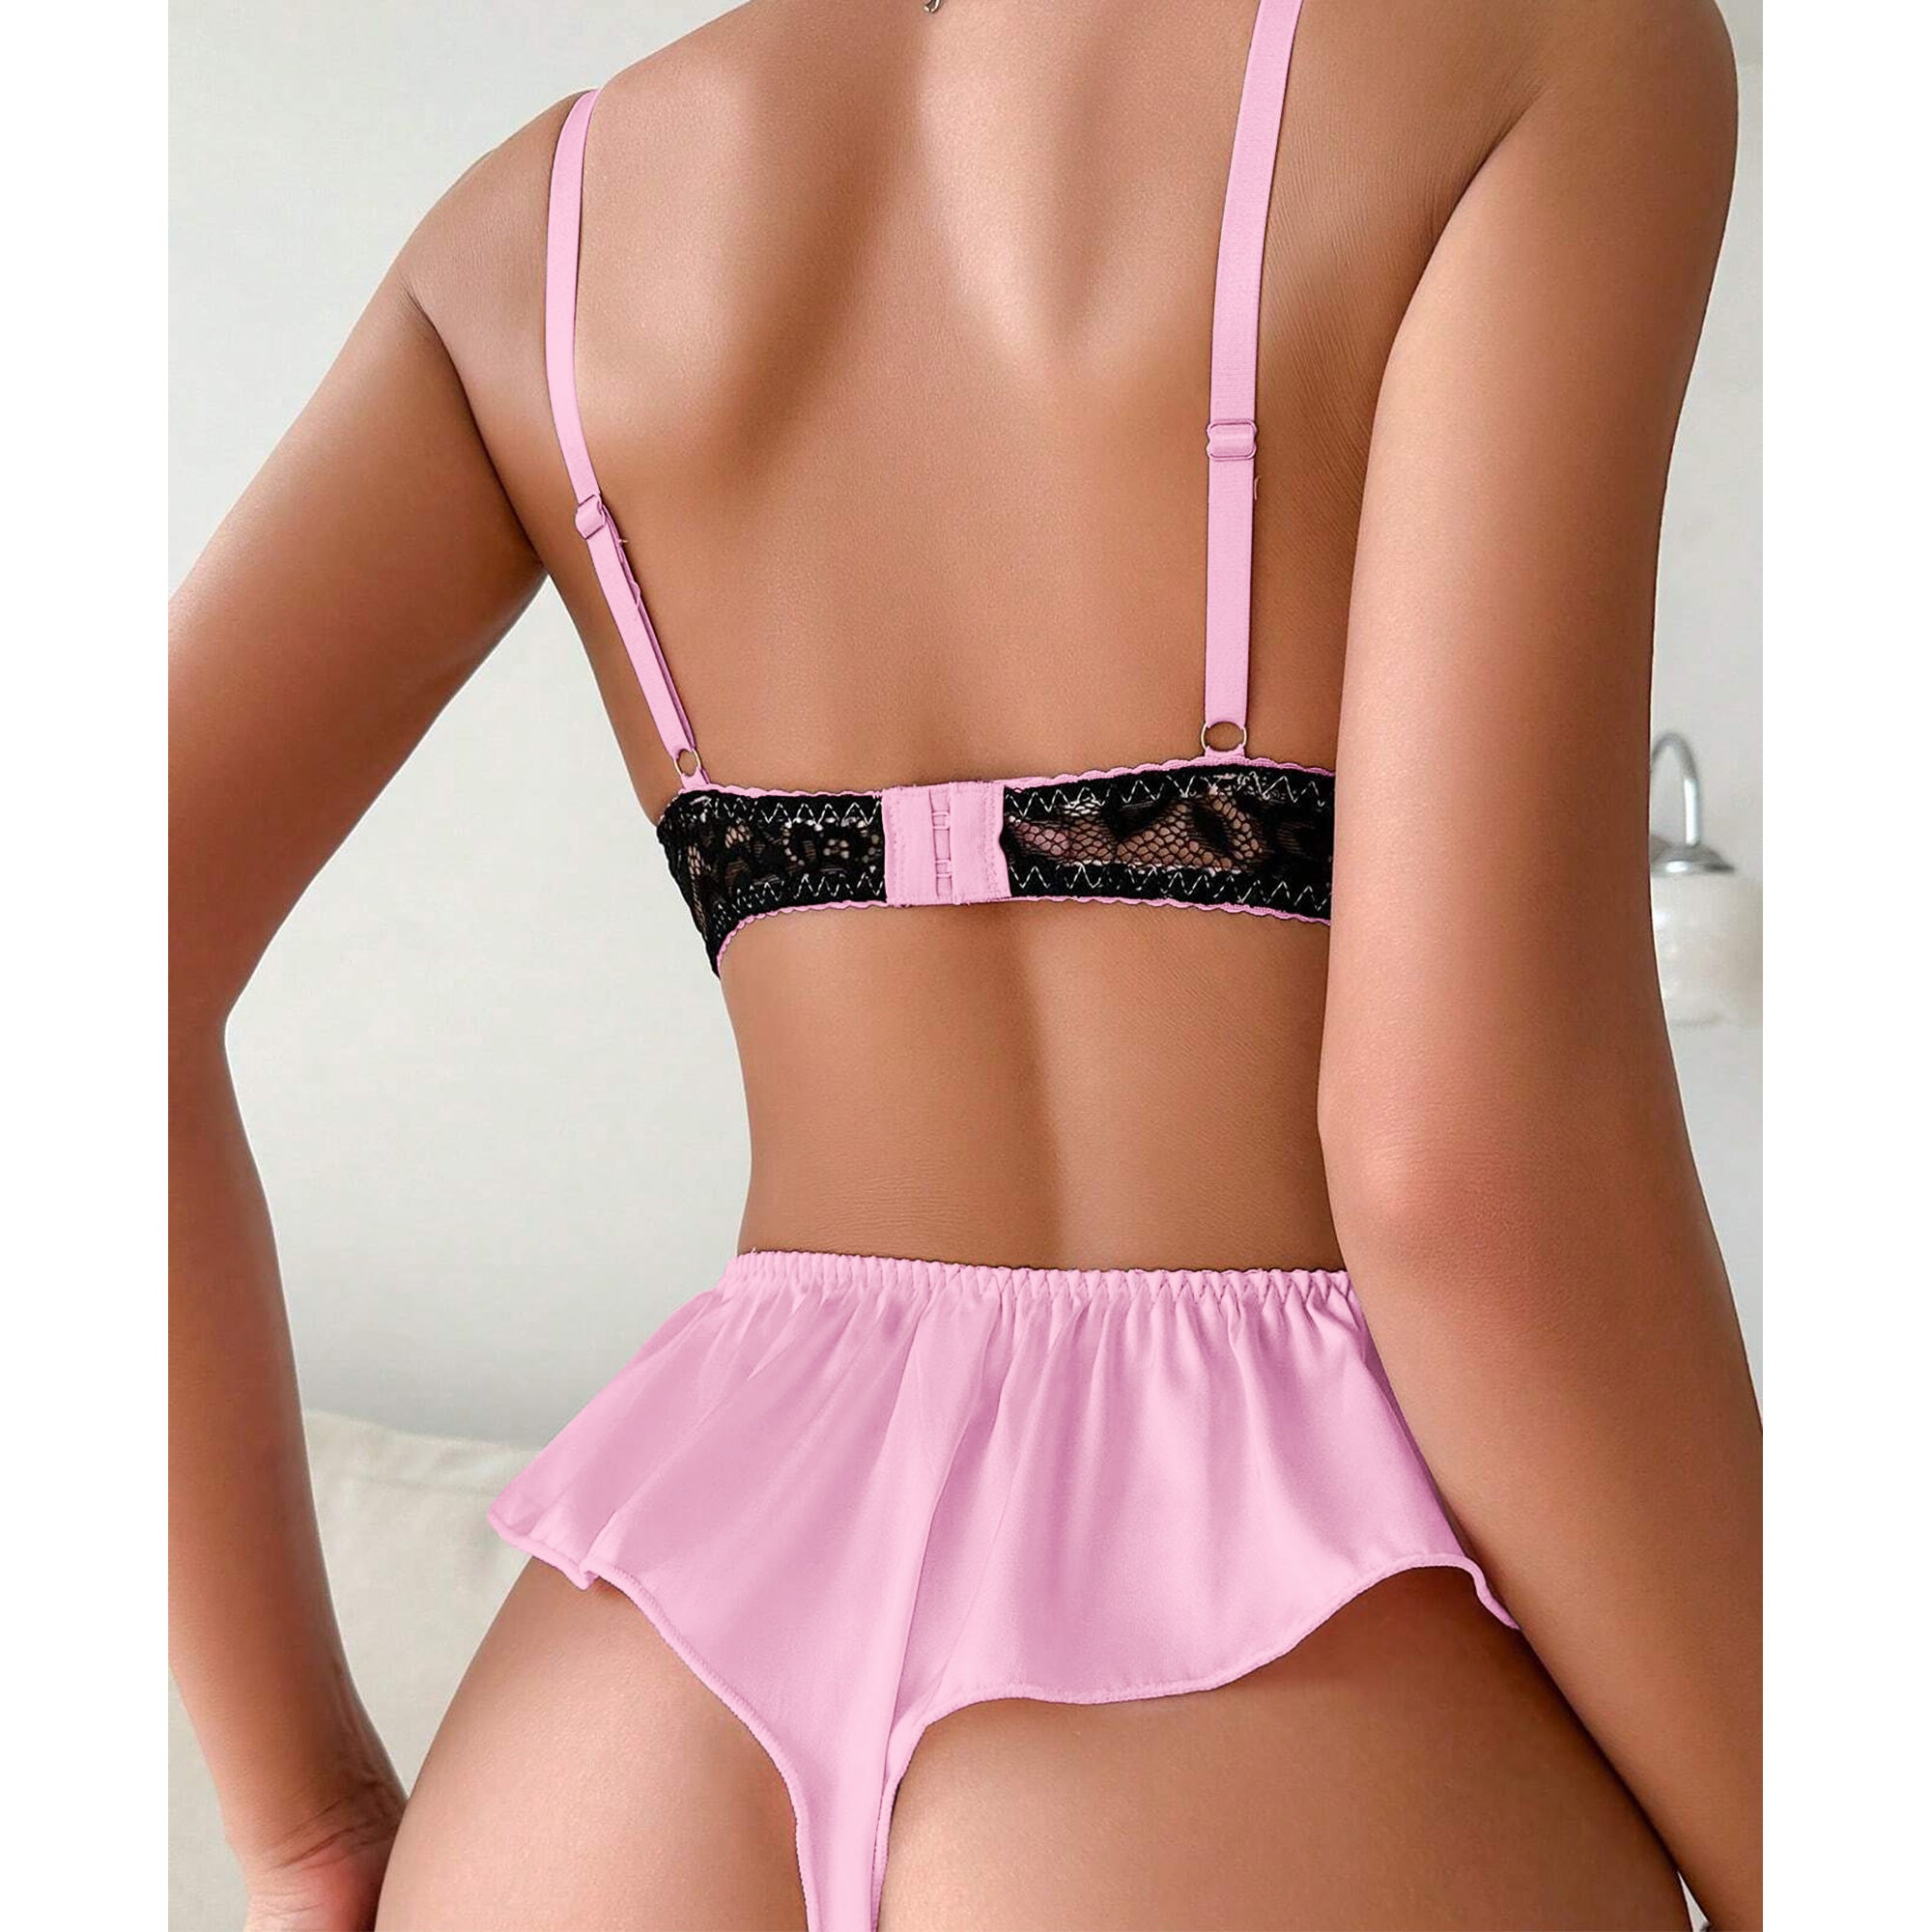 Lingerie for Women Bra Set Mini Lace Hot Pink M